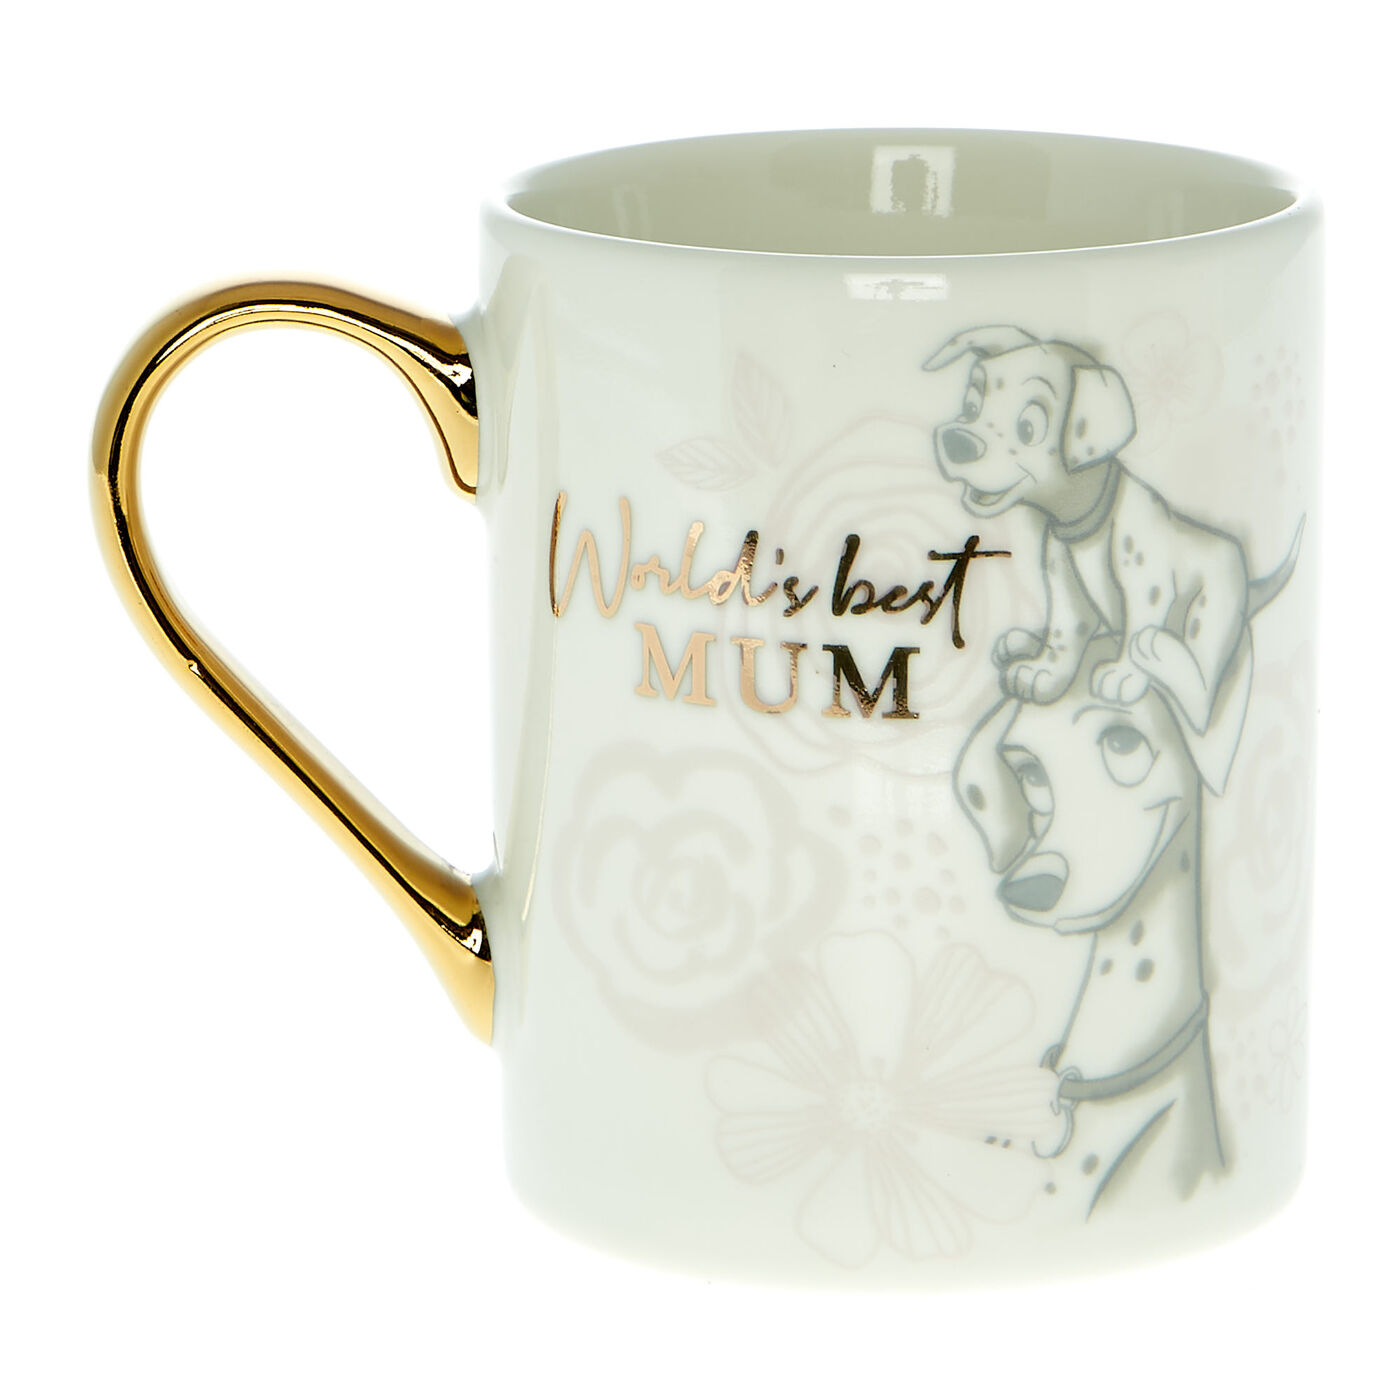 Buy Disney Stitch Mug & Tumbler Gift Set for GBP 7.99